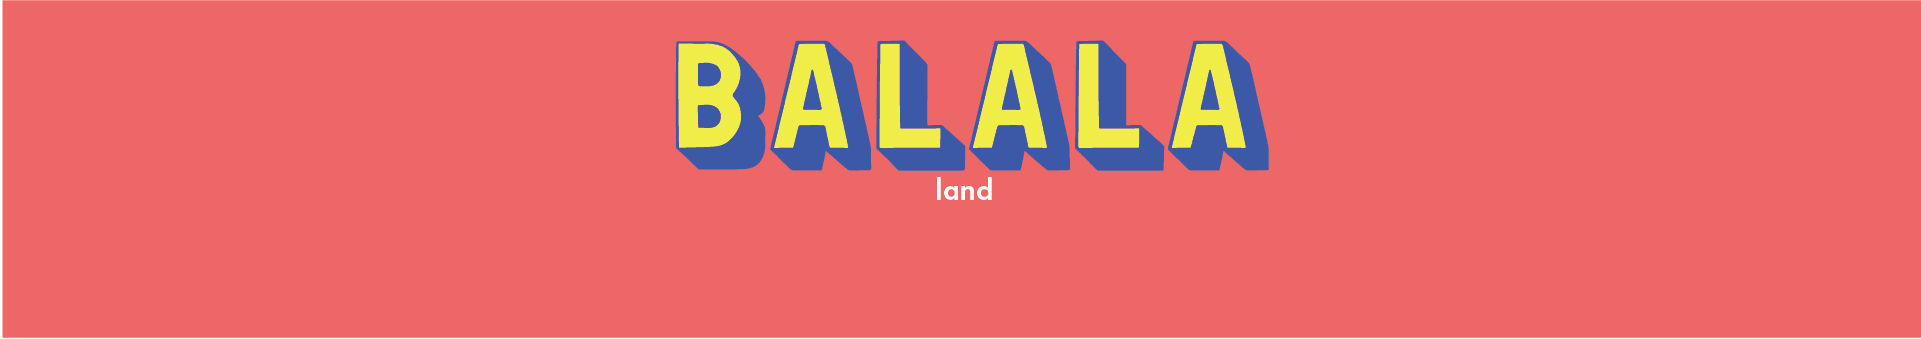 Balalaland banner